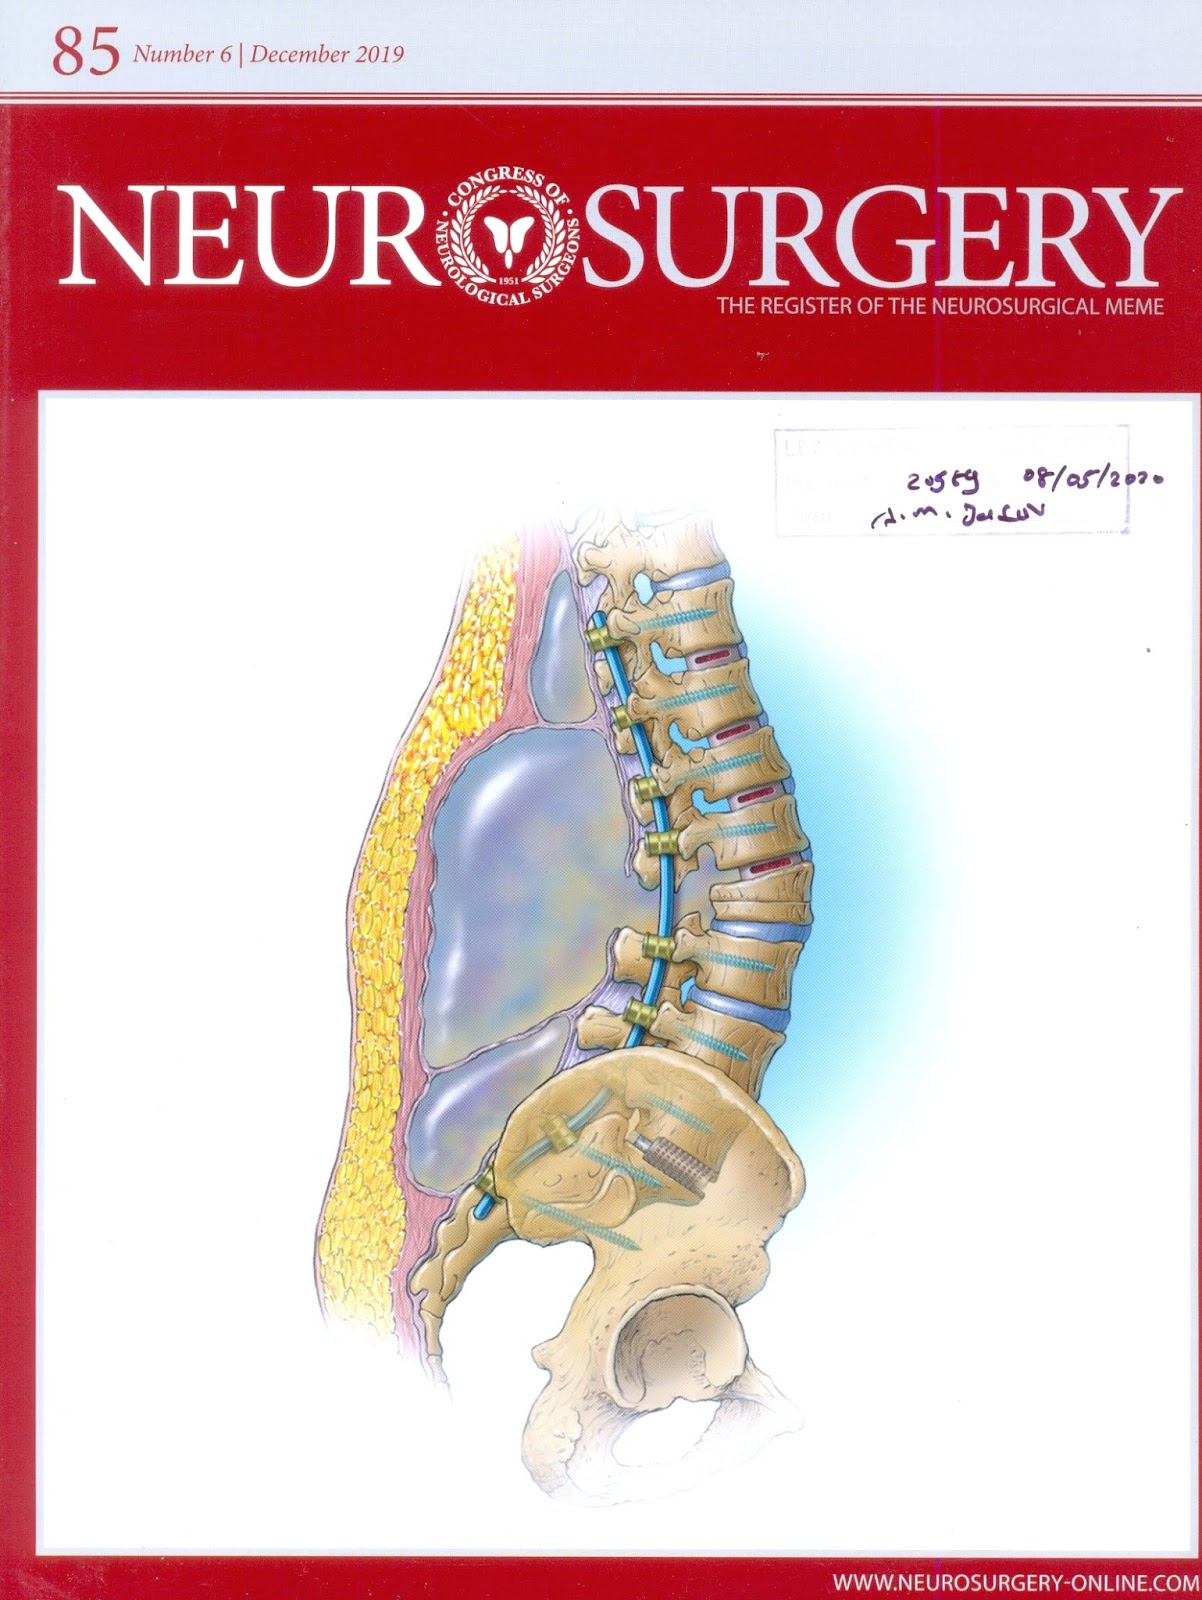 https://academic.oup.com/neurosurgery/issue/85/6